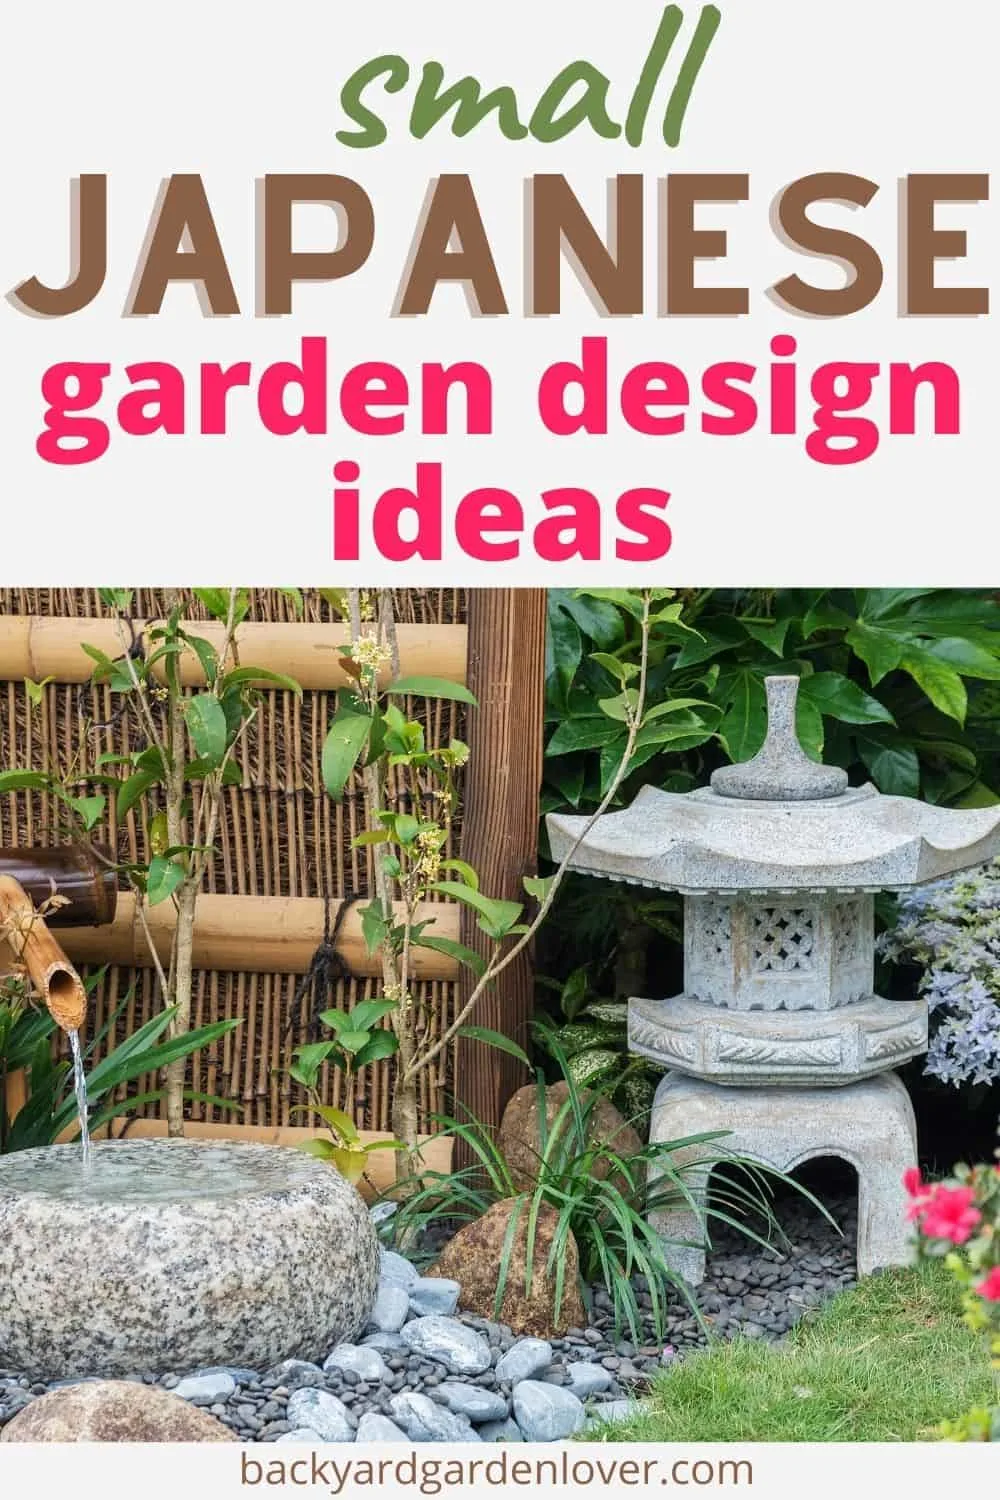 Small Japanese garden design ideas - Pinterest image